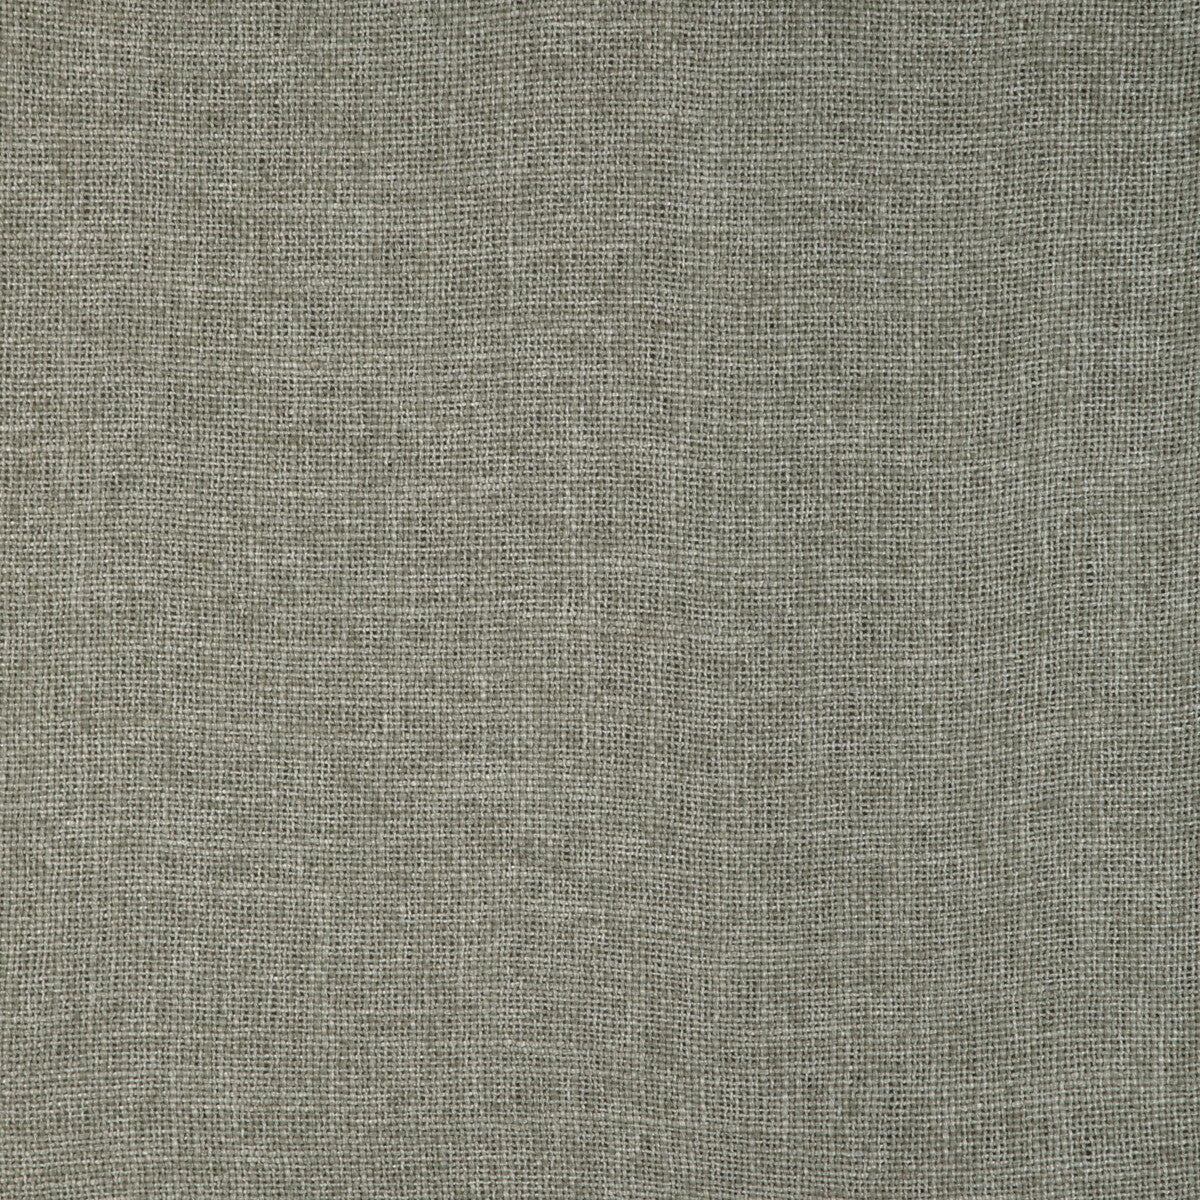 Kravet Design fabric in 90011-130 color - pattern 90011.130.0 - by Kravet Design in the Reveal collection